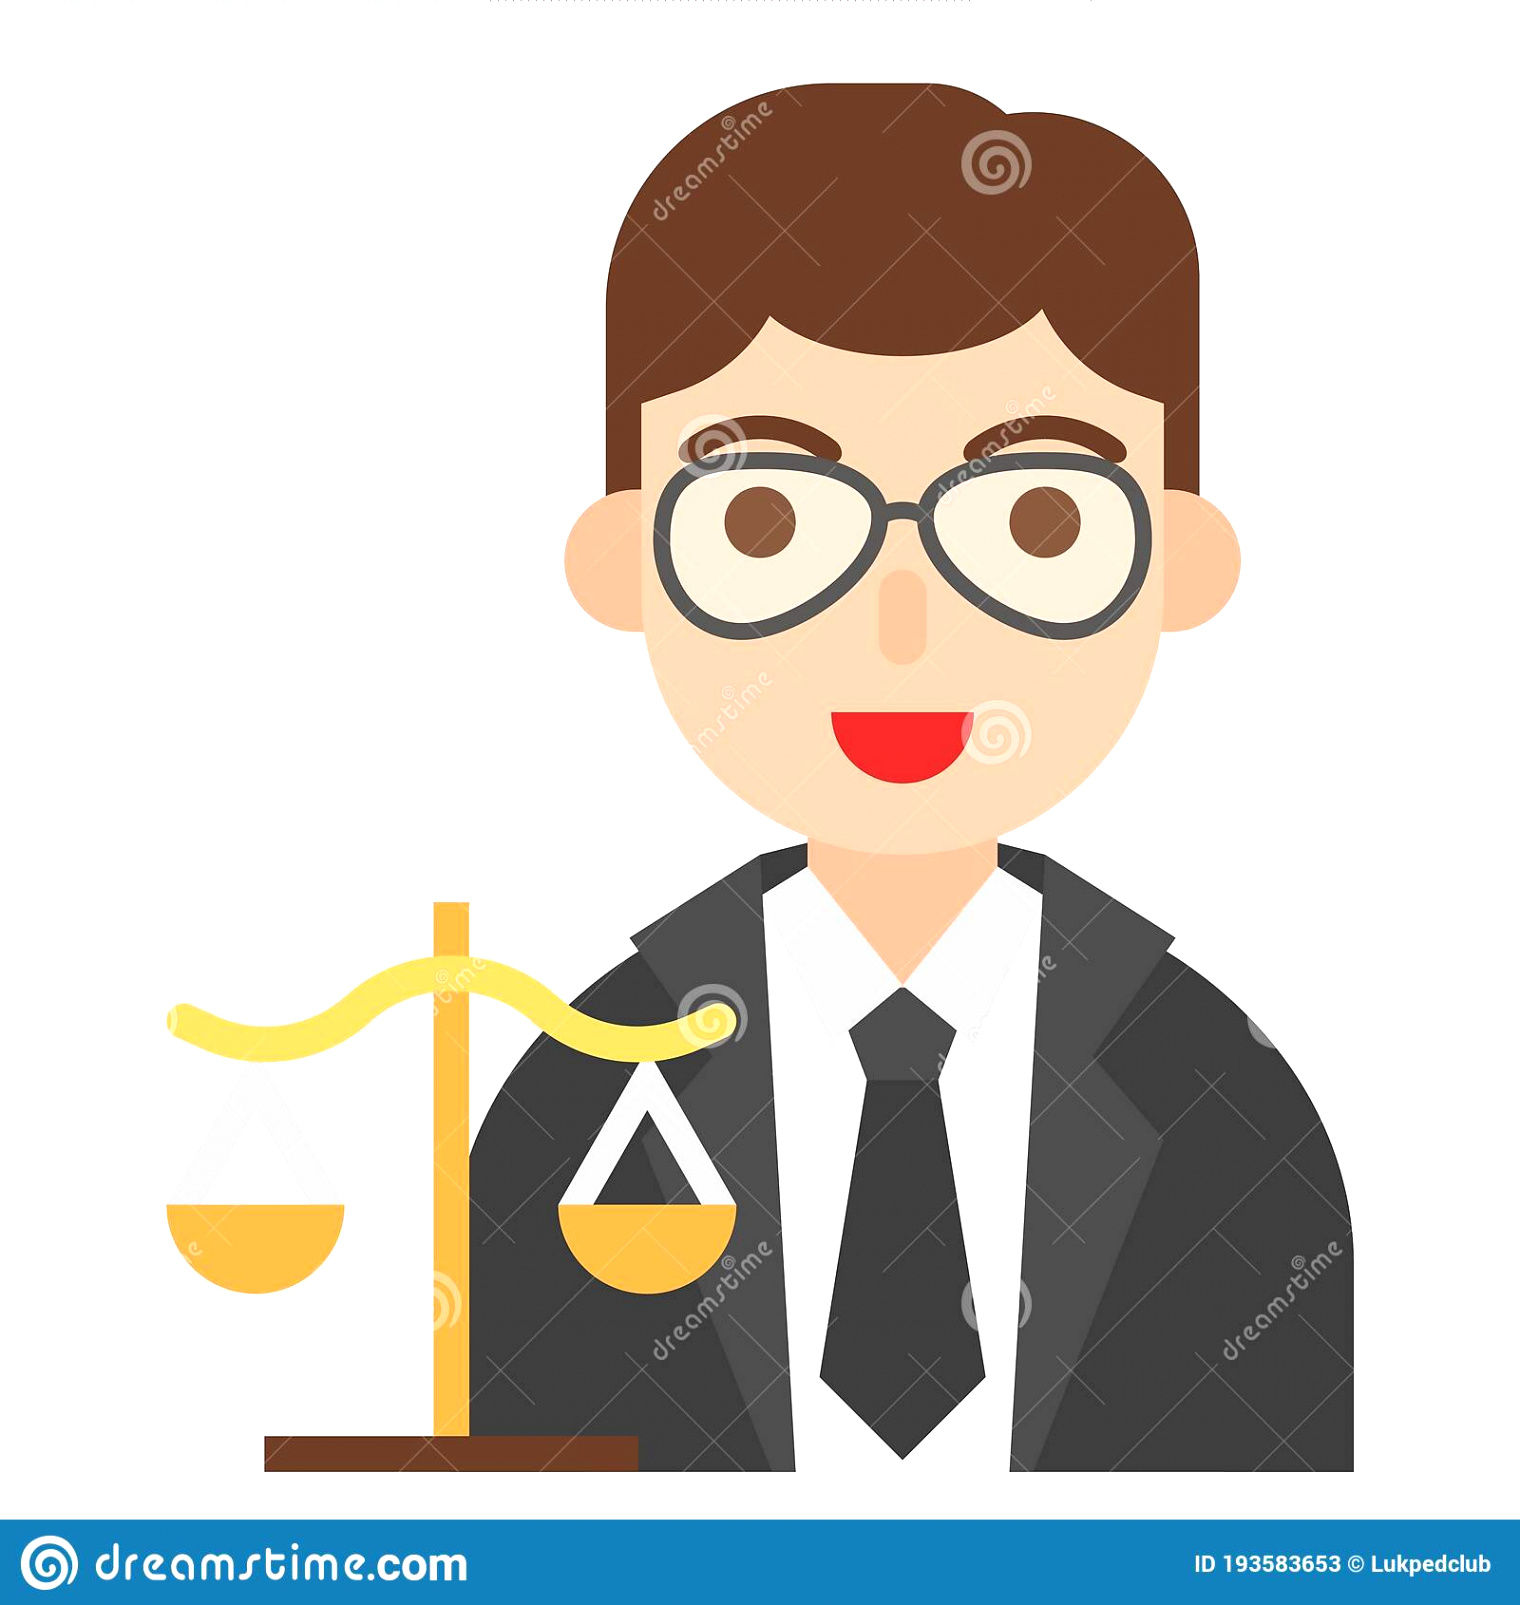 lawyer icon profession job vector illustration image